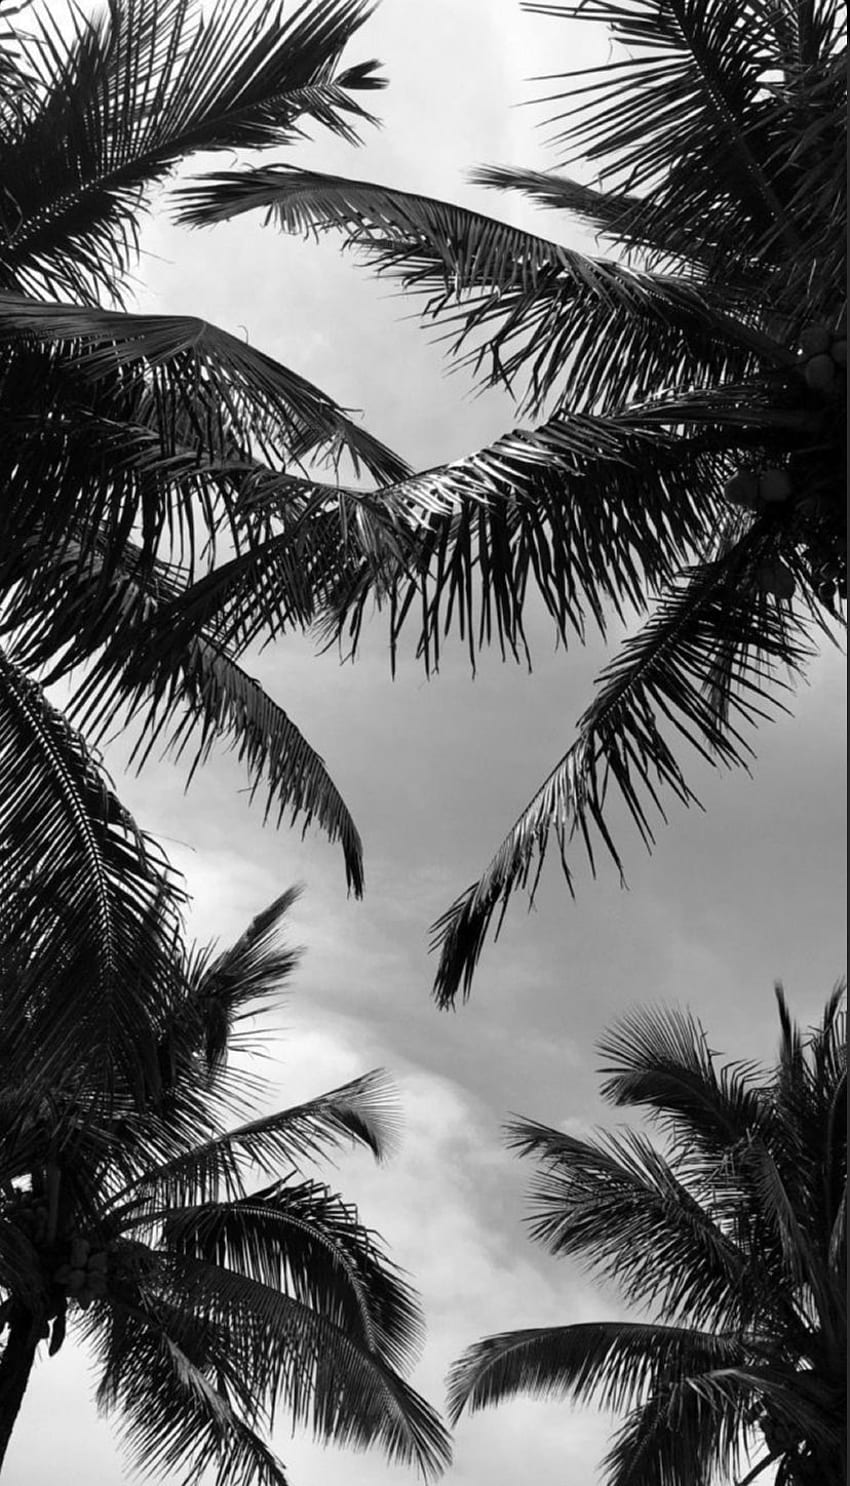 Download wallpaper 1920x1080 palms tropics bw trees full hd hdtv fhd  1080p hd background